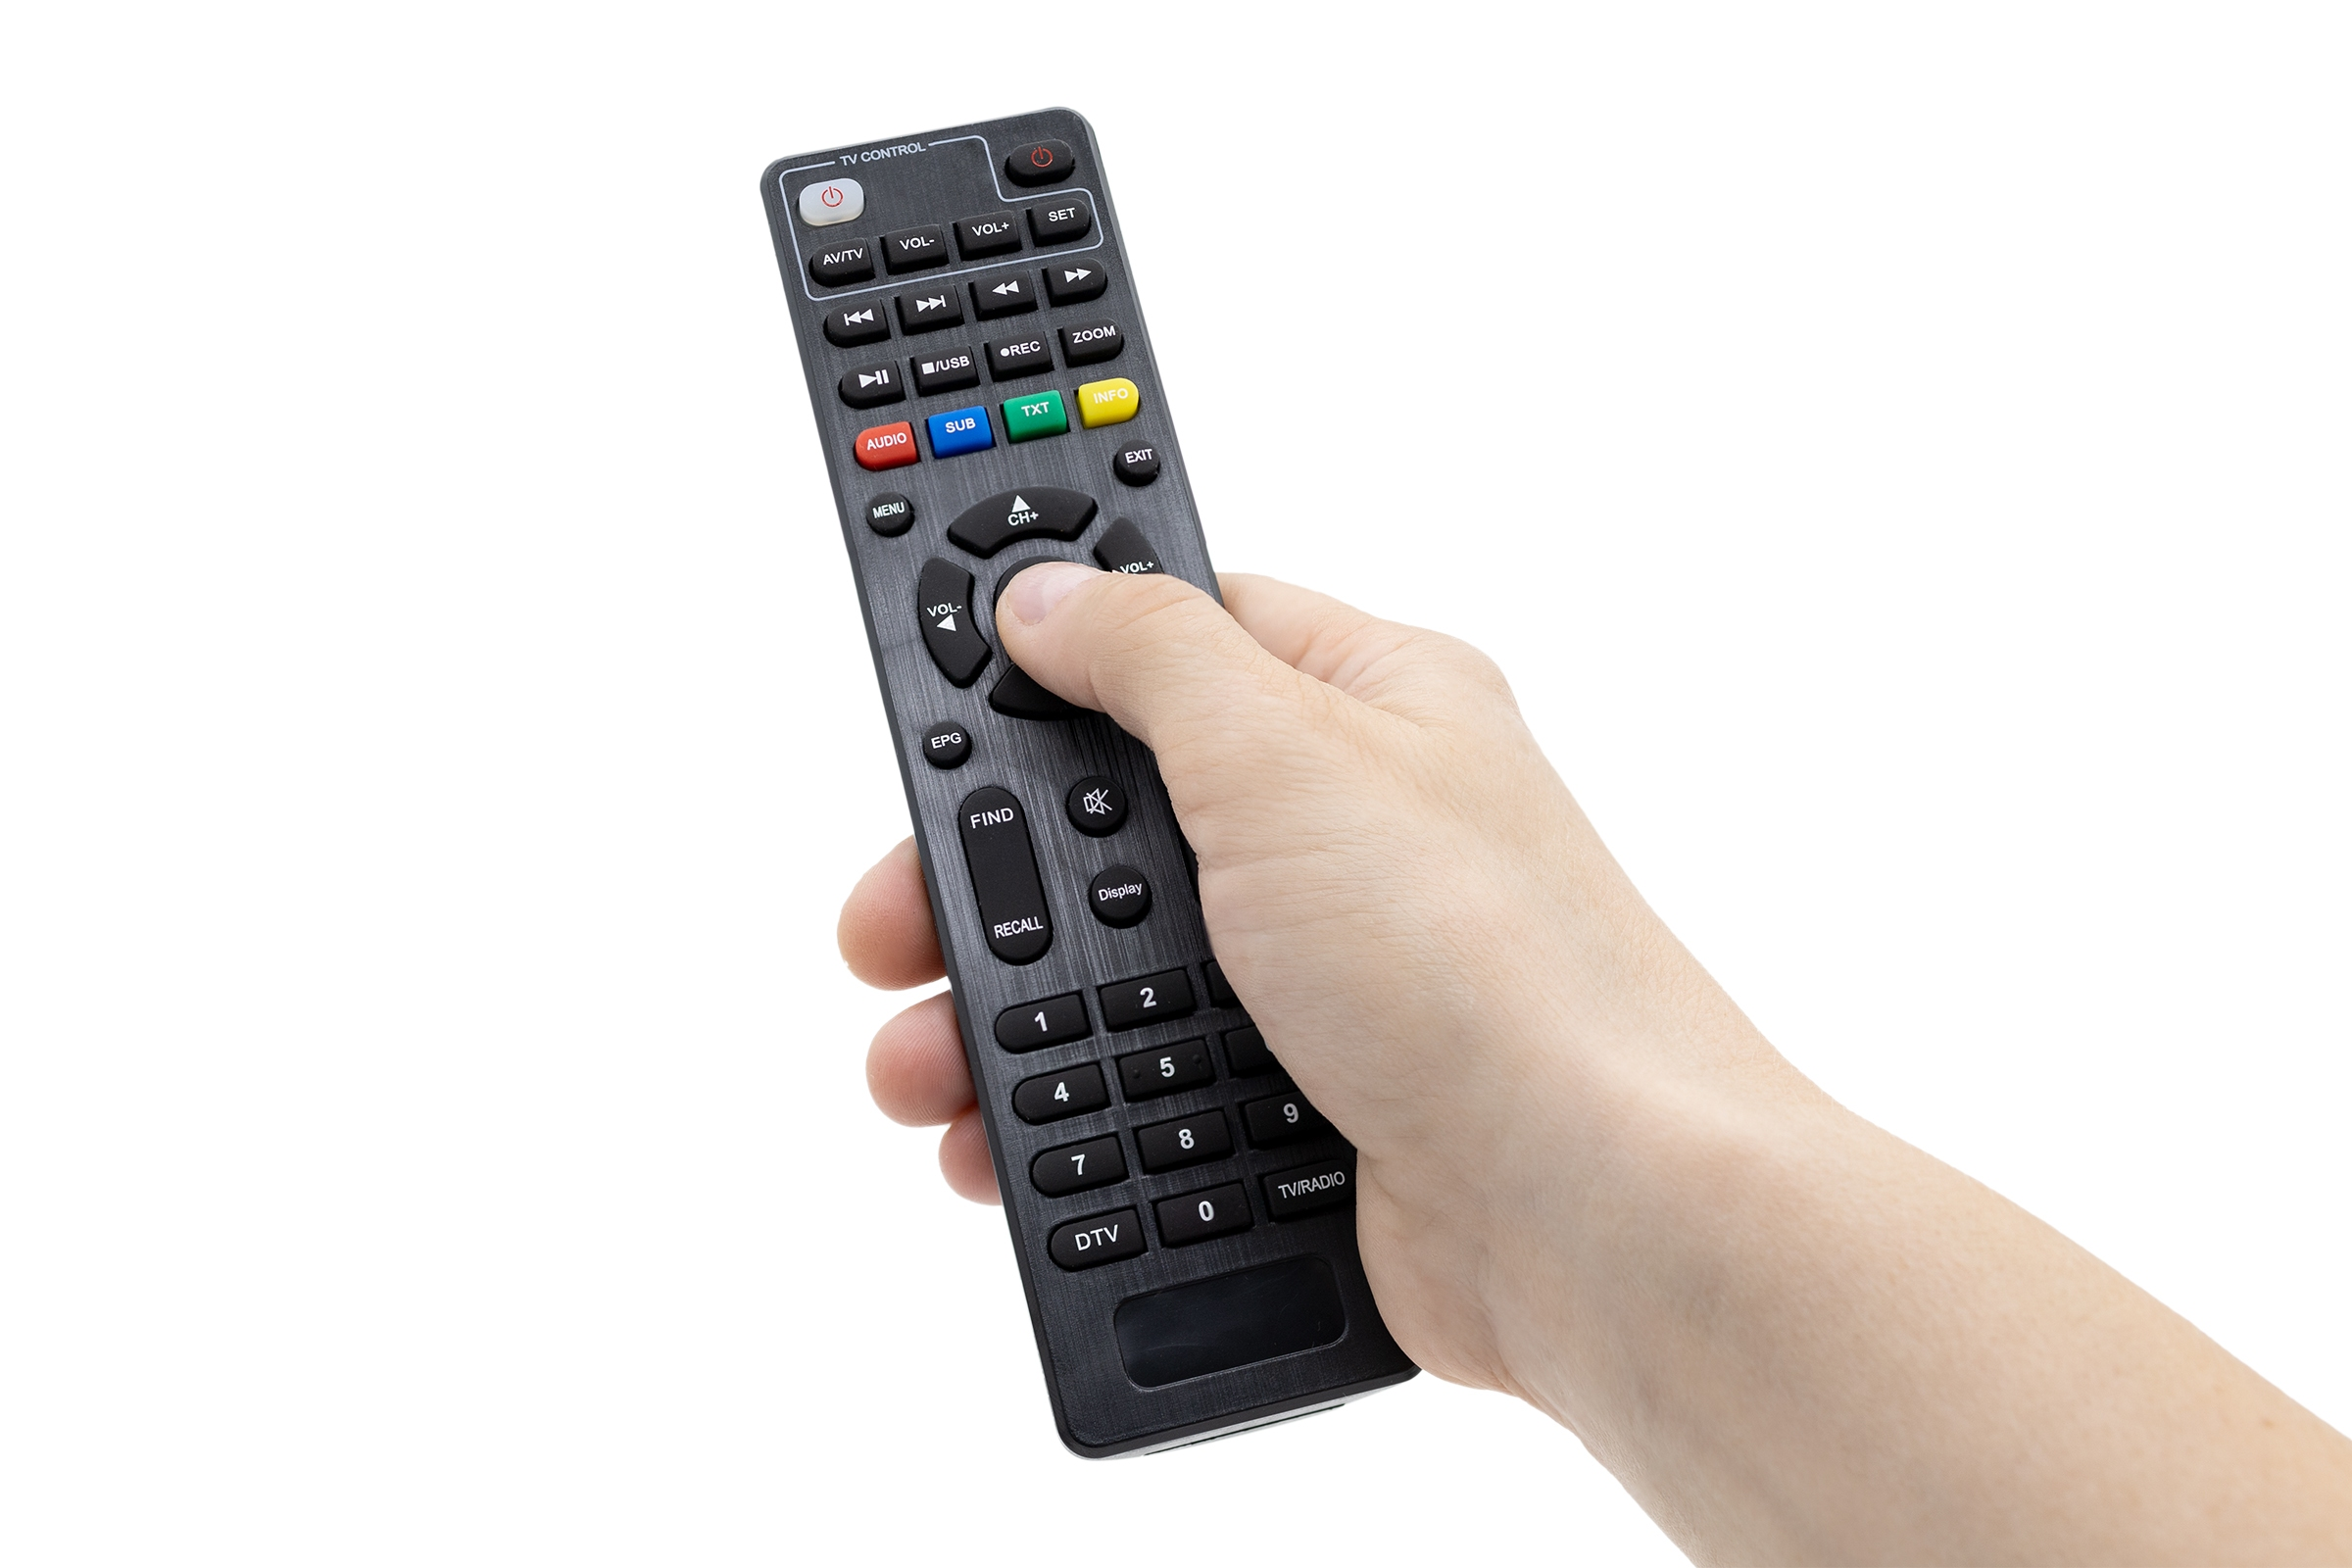 schwarz) DVB-C, (HDTV, Kabelreceiver GALLUNOPTIMAL PVR-Funktion, DVB-T, GOTC3001 HD